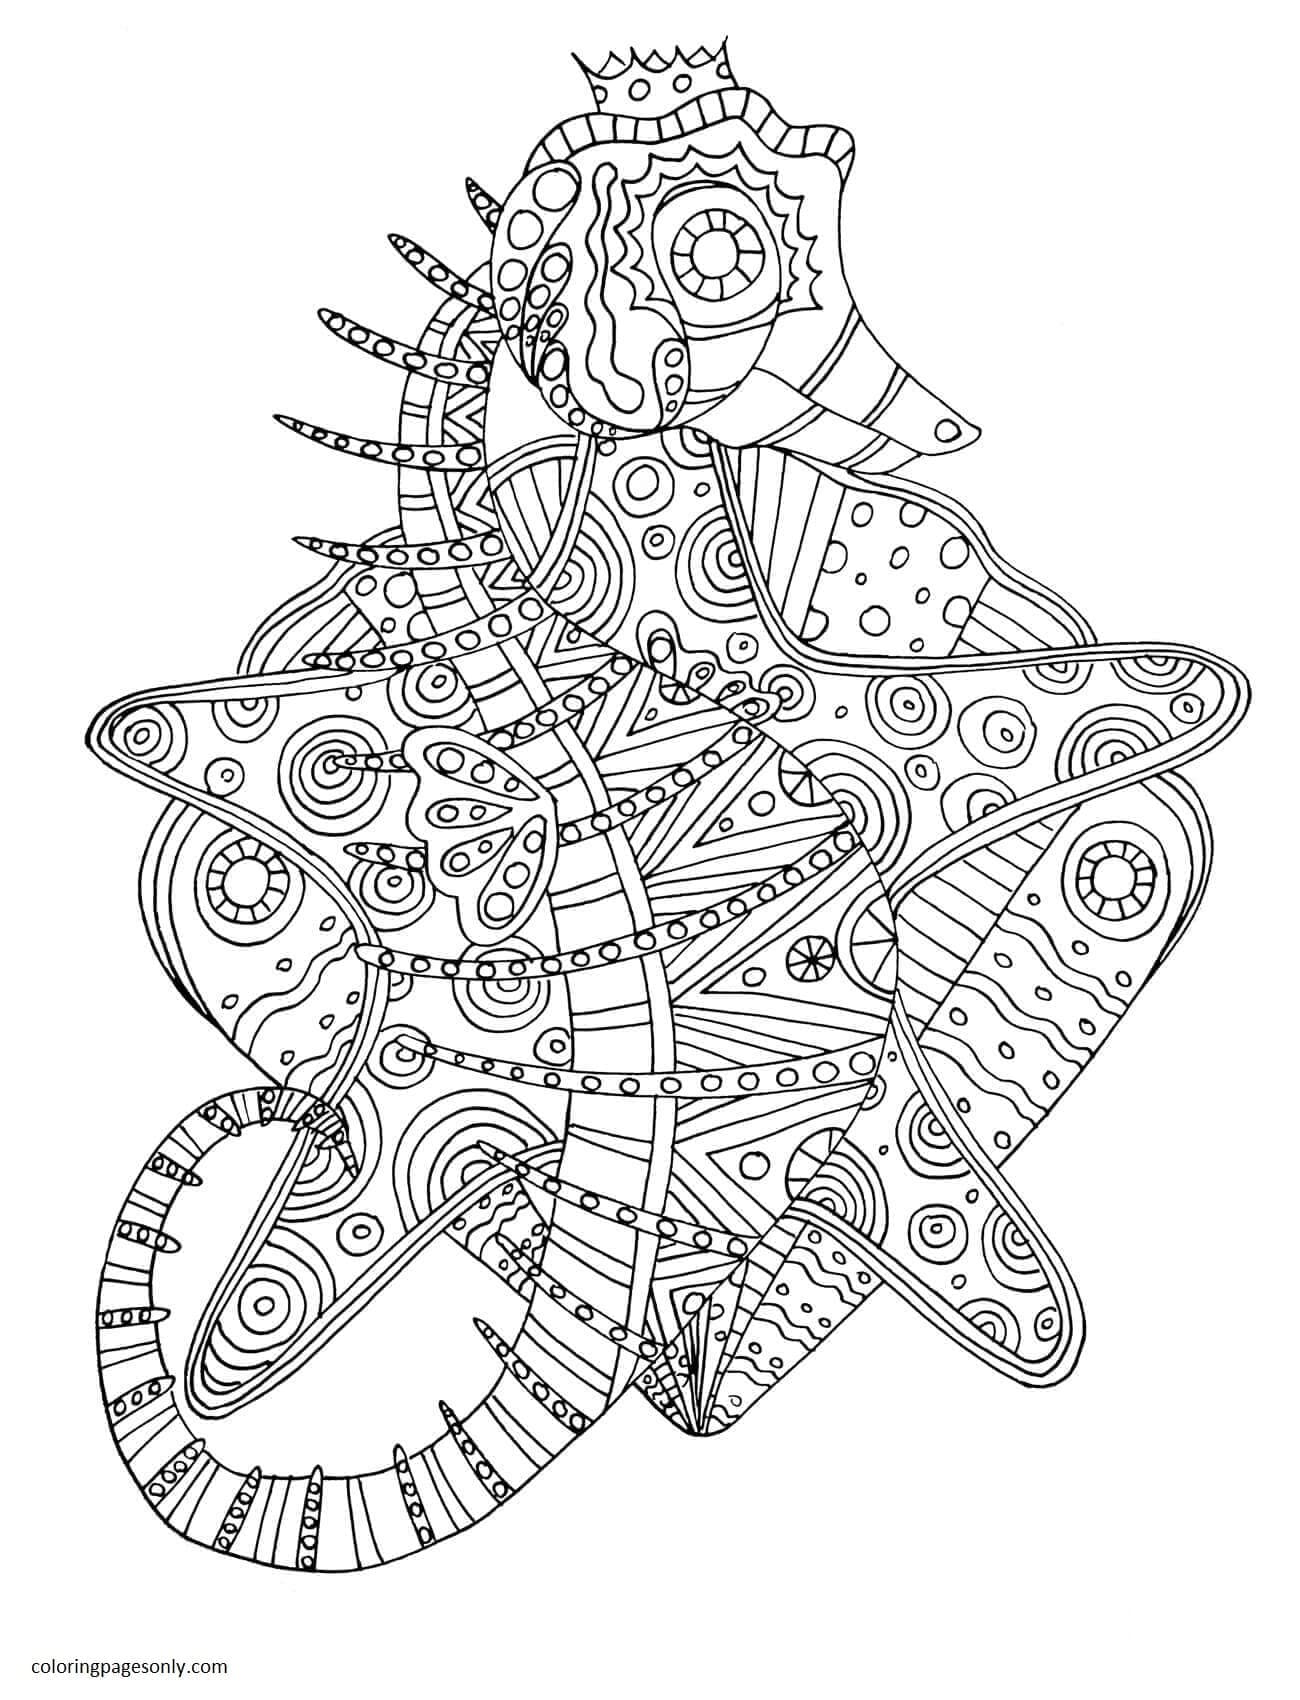 Caballito de mar con patrón tribal Página para colorear